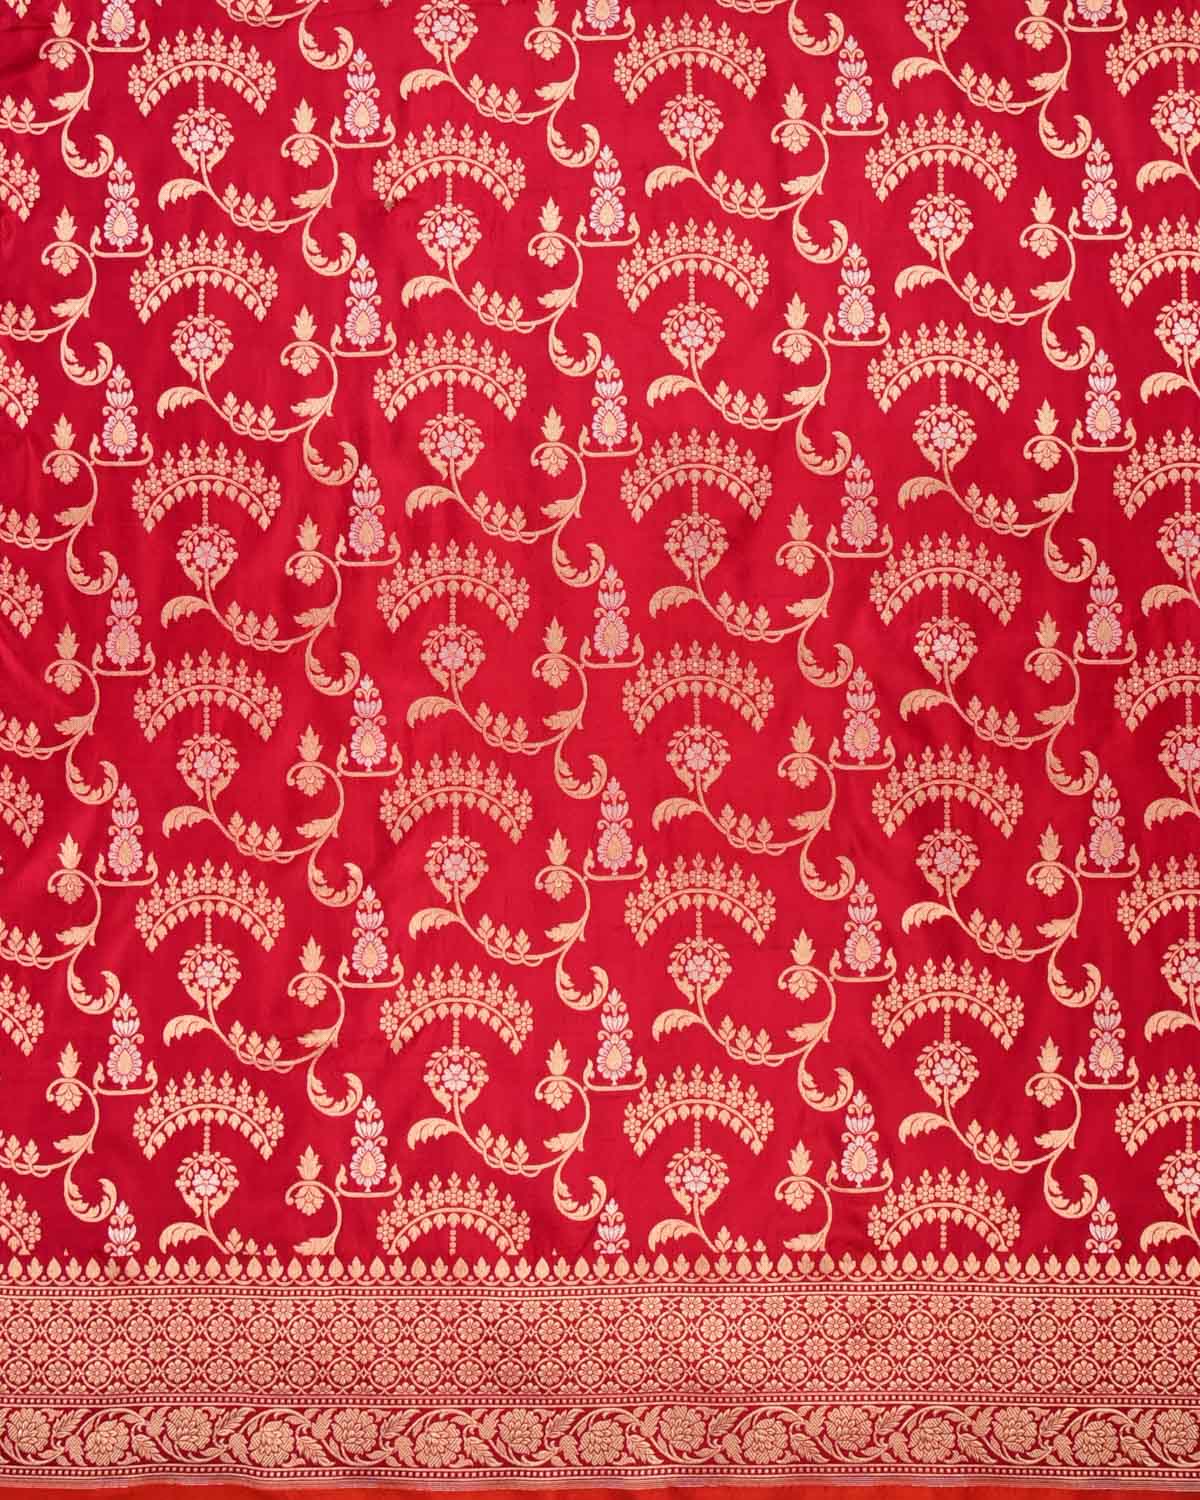 Shot Red Banarasi "Shringaar" Jaal Cutwork Brocade Handwoven Katan Silk Saree - By HolyWeaves, Benares